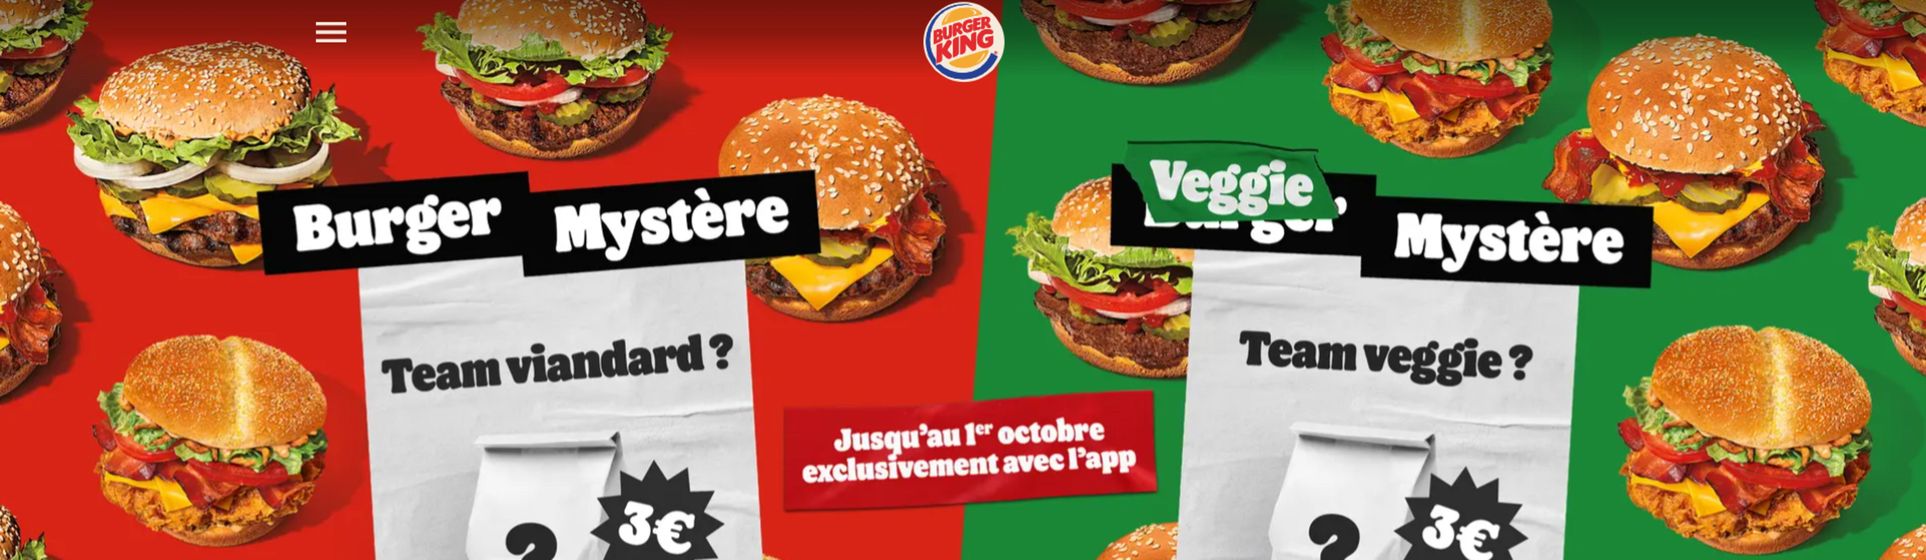 Nouvelle offres Burger King